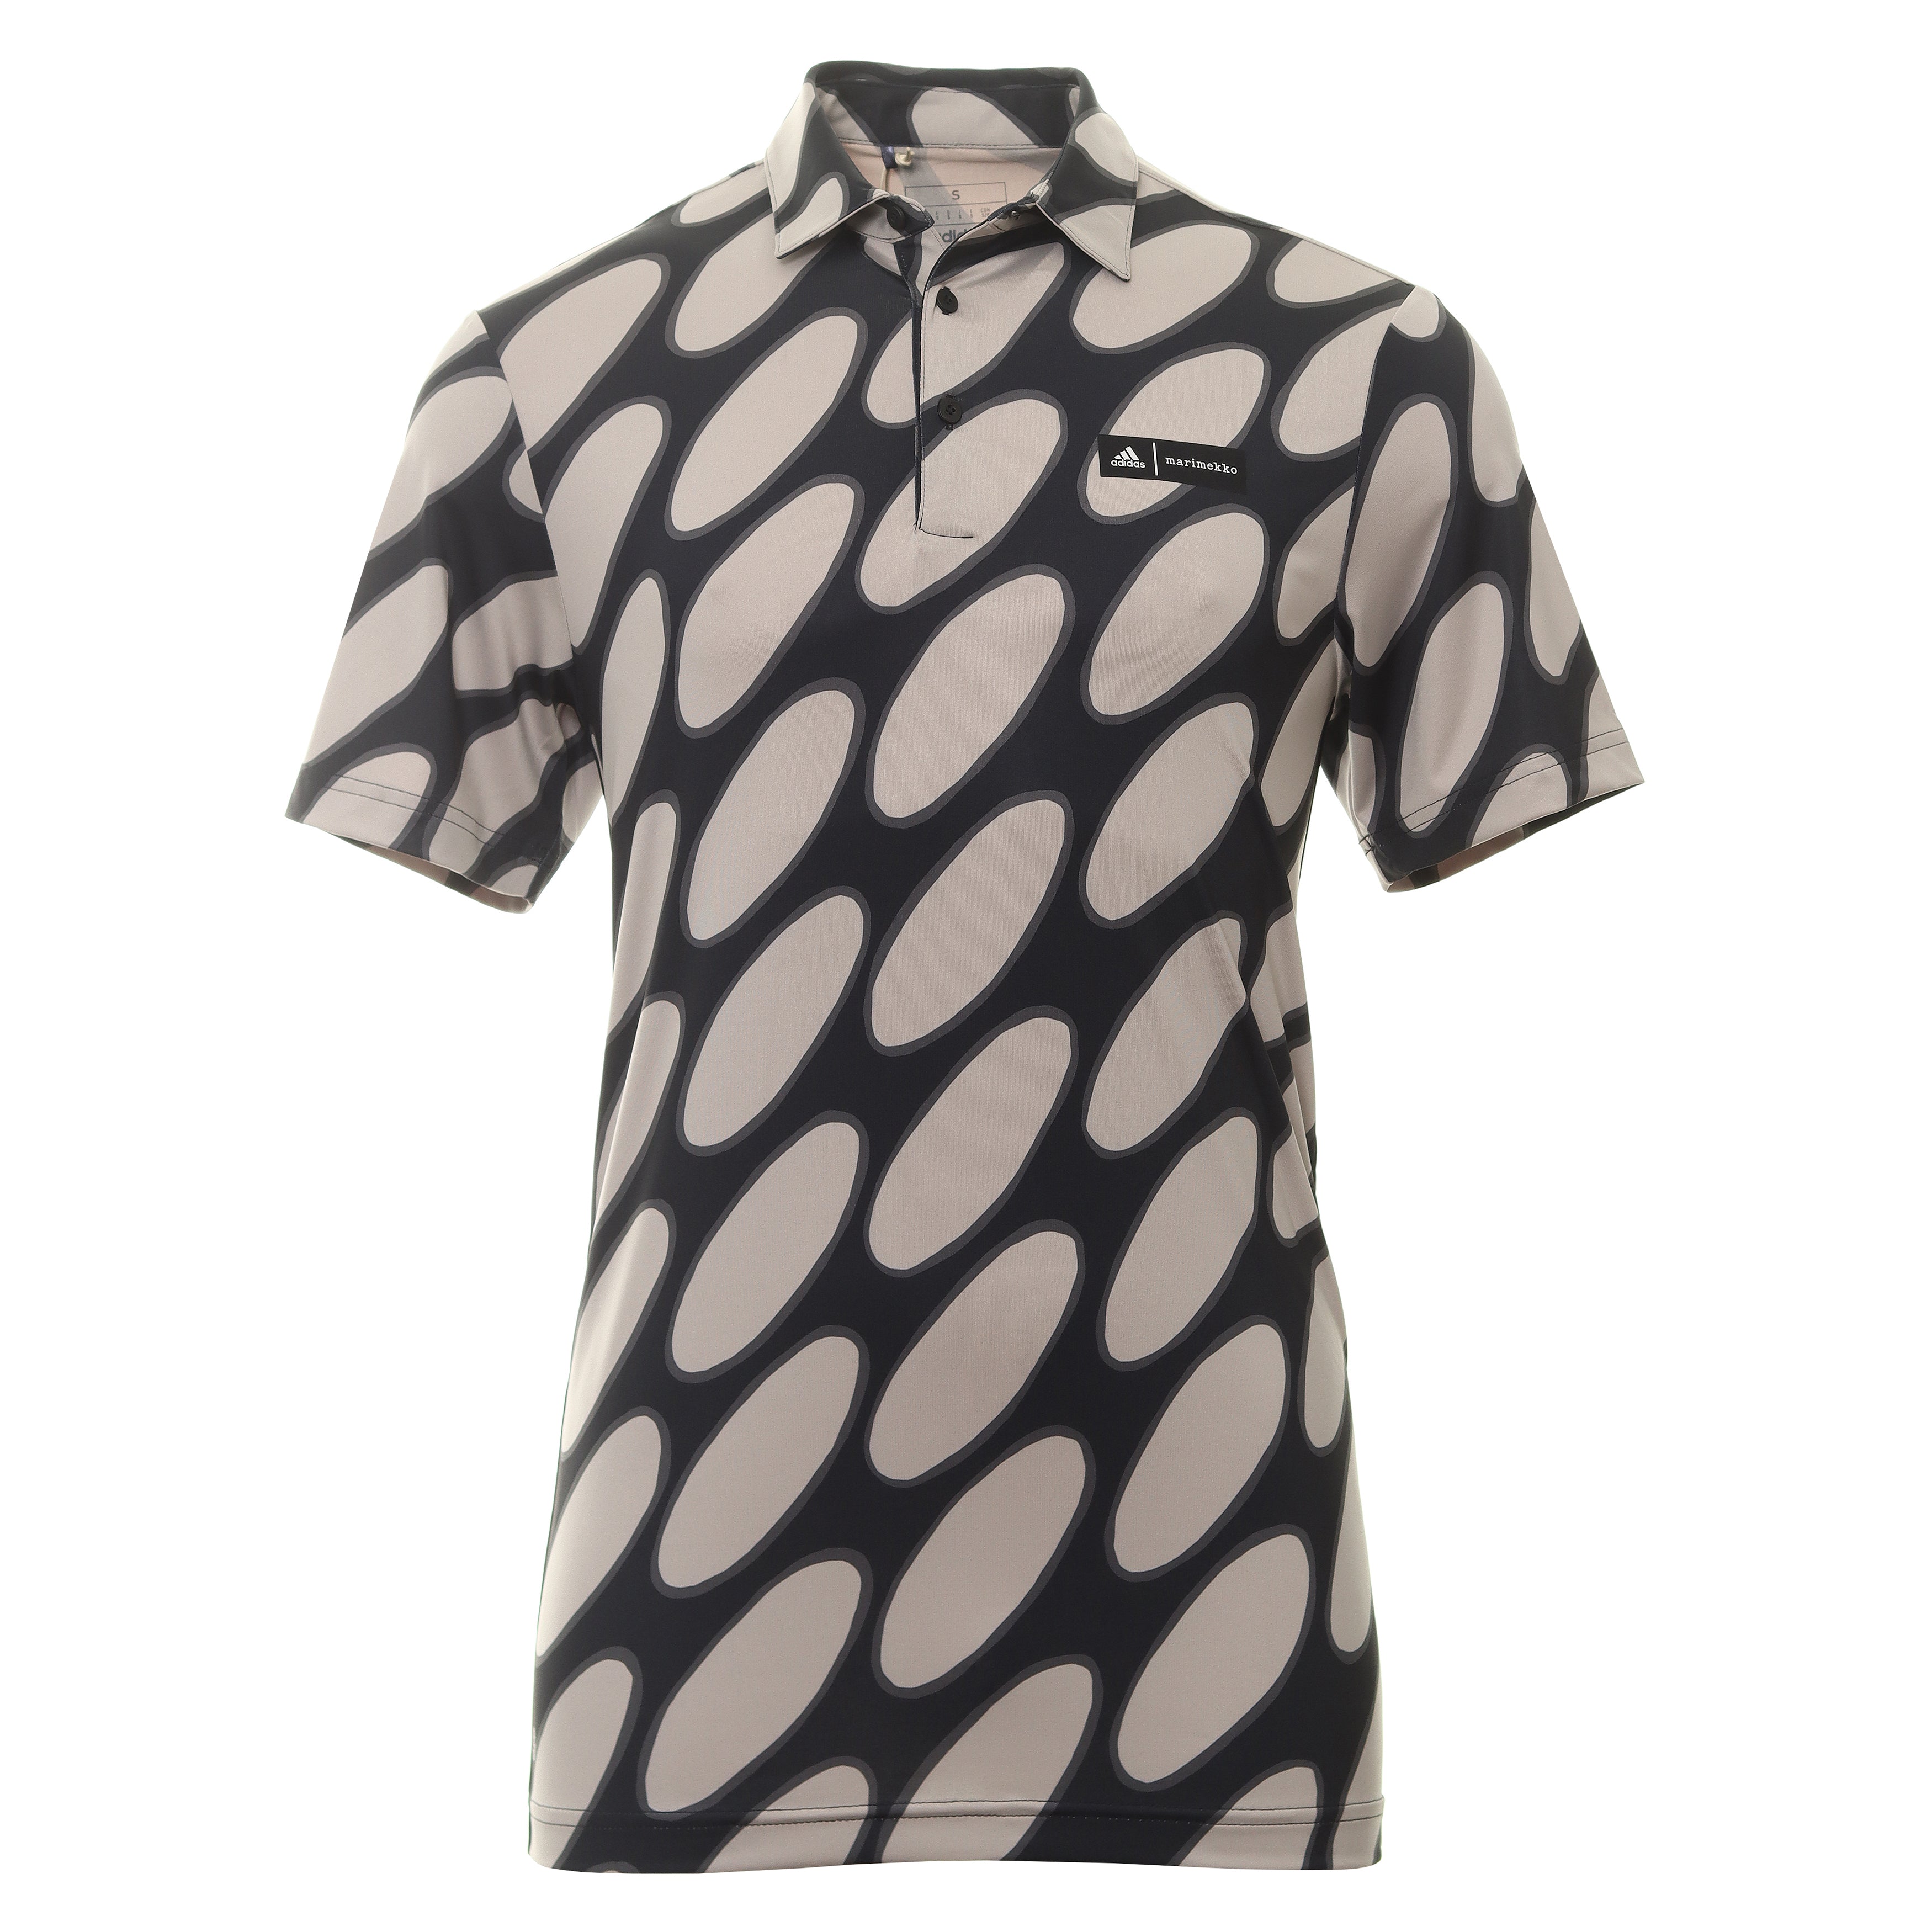 adidas Golf x Marimekko Shirt HS7614 Black & Function18 | Restrictedgs